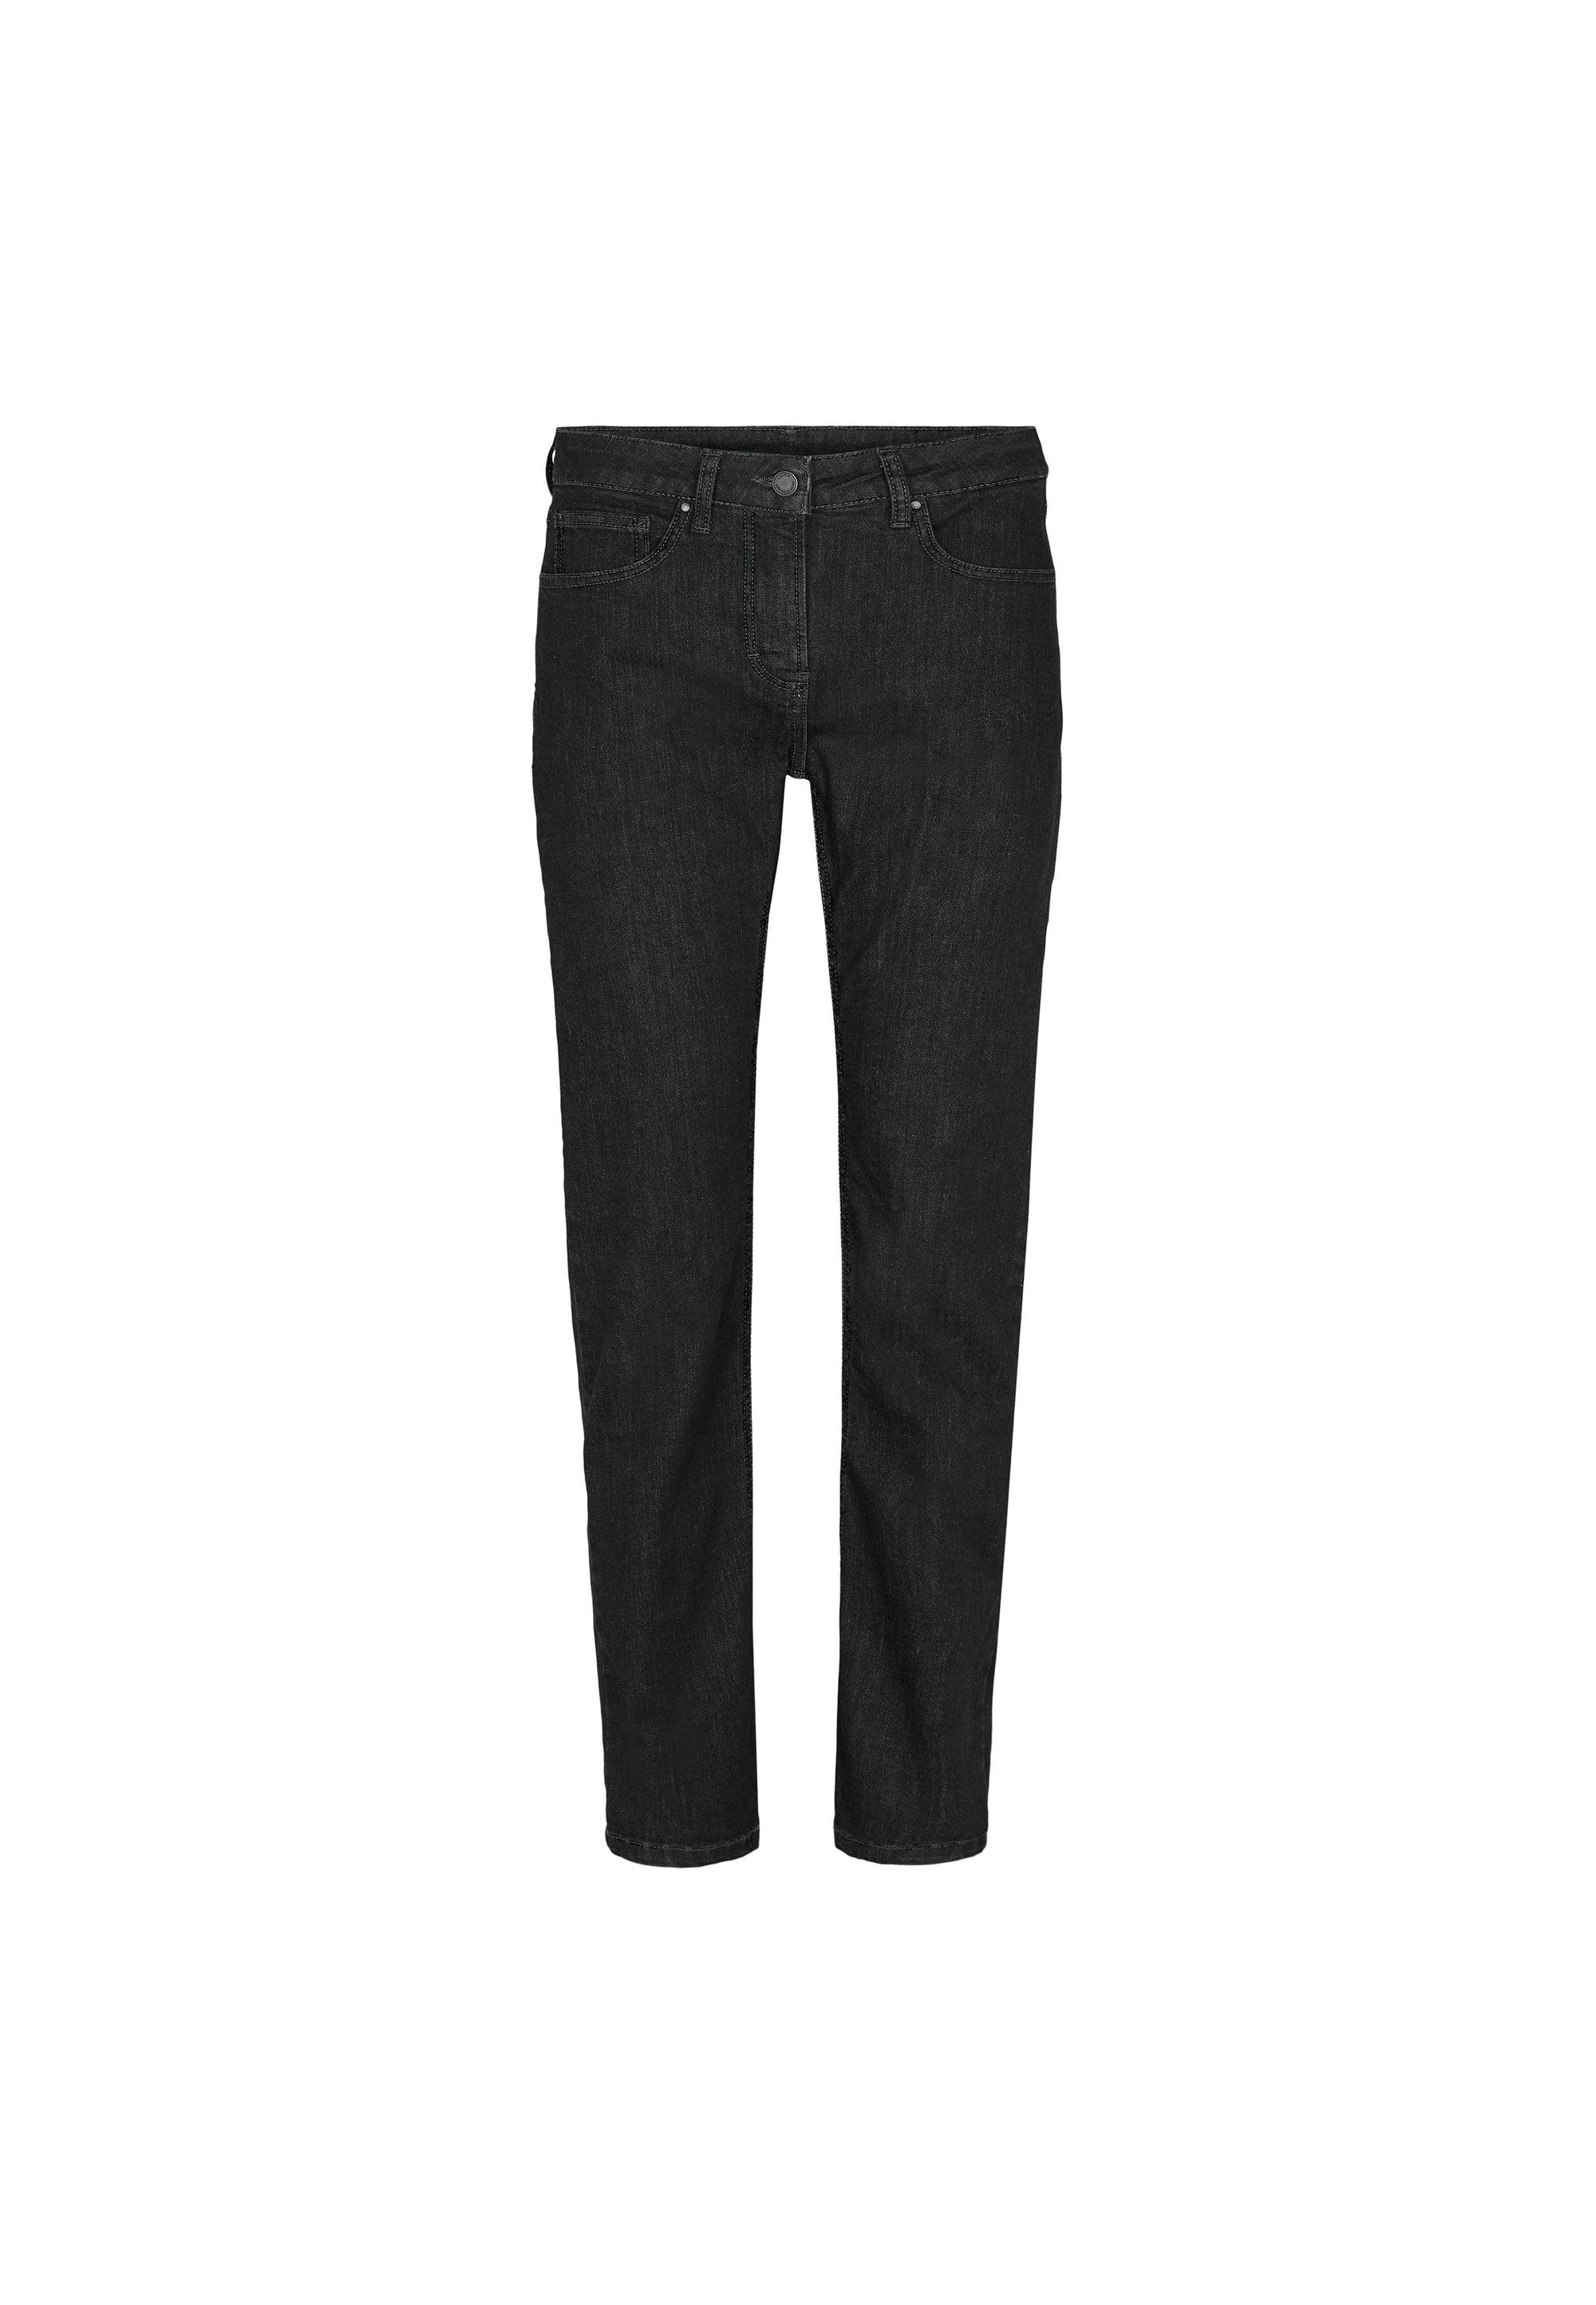 LAURIE Charlotte Regular - Medium Length - Ecolabel Trousers REGULAR 99520 Washed Black Denim